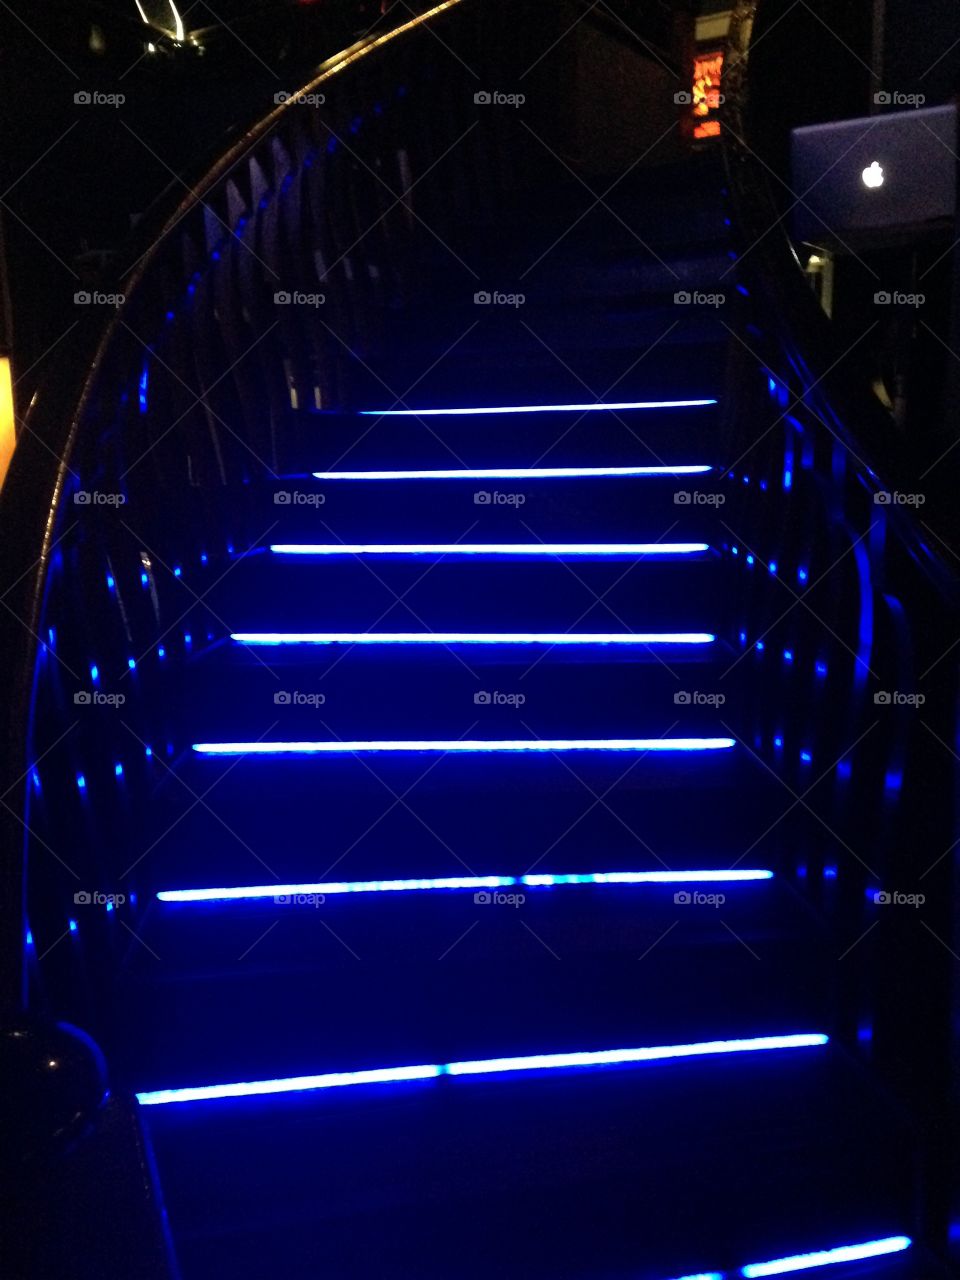 Stairway to arcade heaven